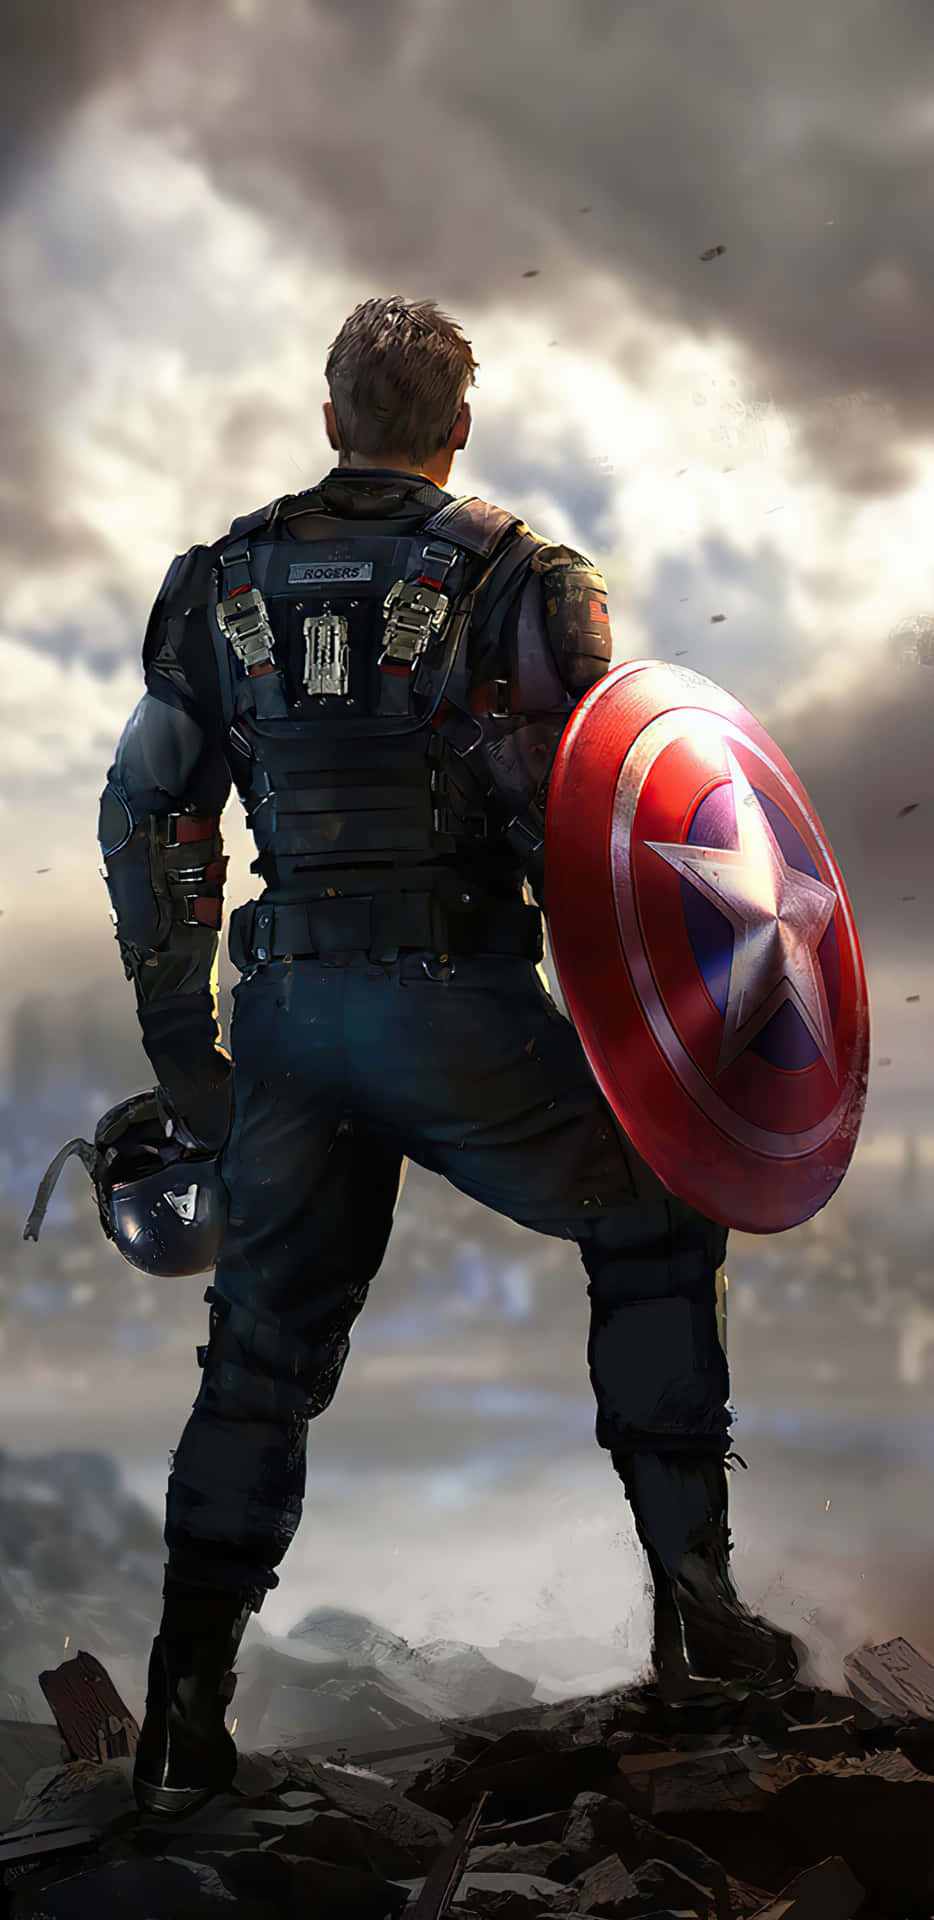 Pixel3xl Hintergrundbild Captain America Marvel's Avengers Spiel